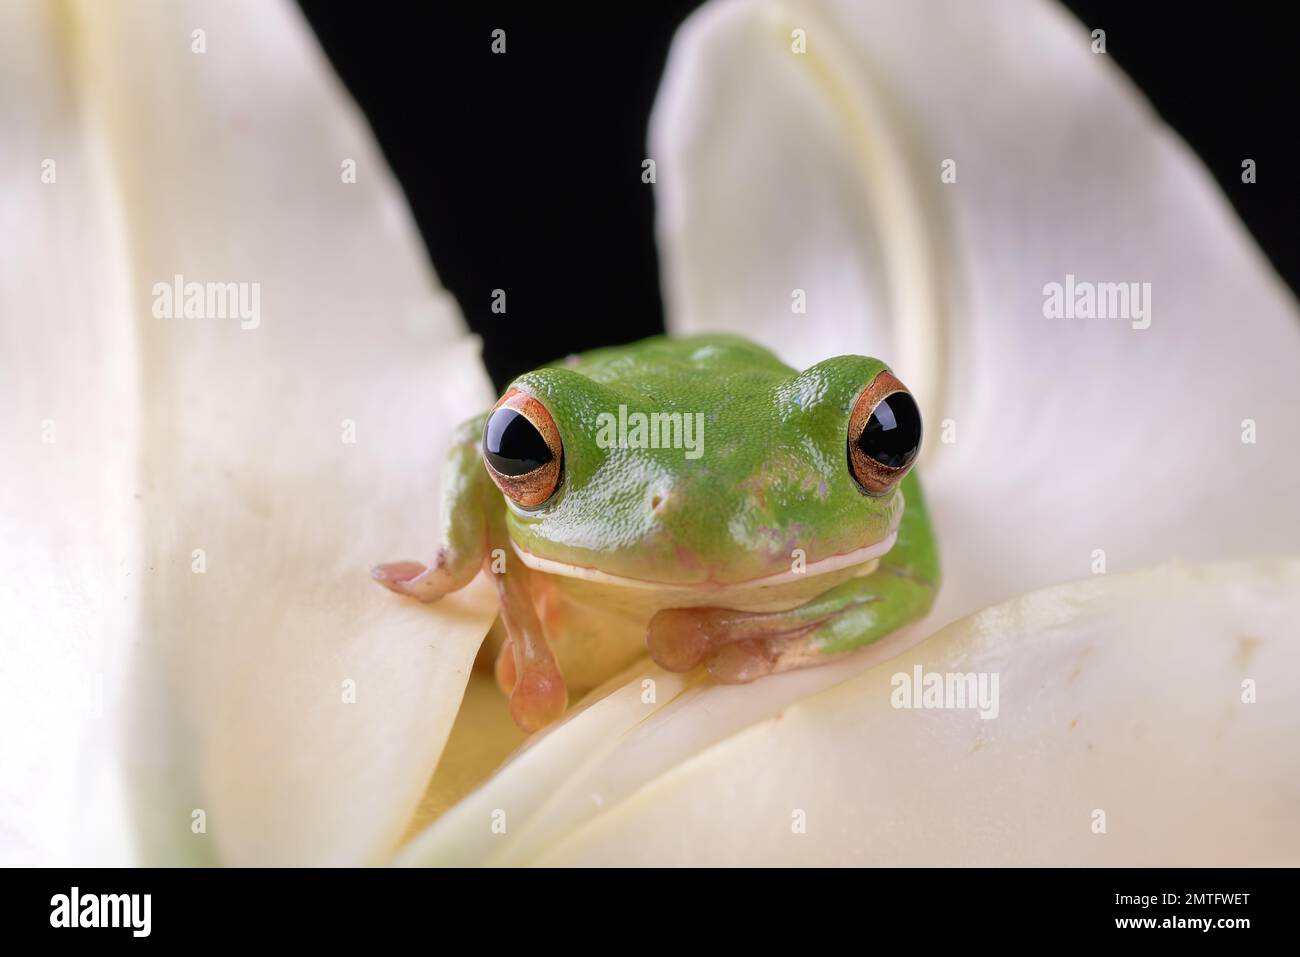 Dumpy frog hiding inside lily flower Stock Photo